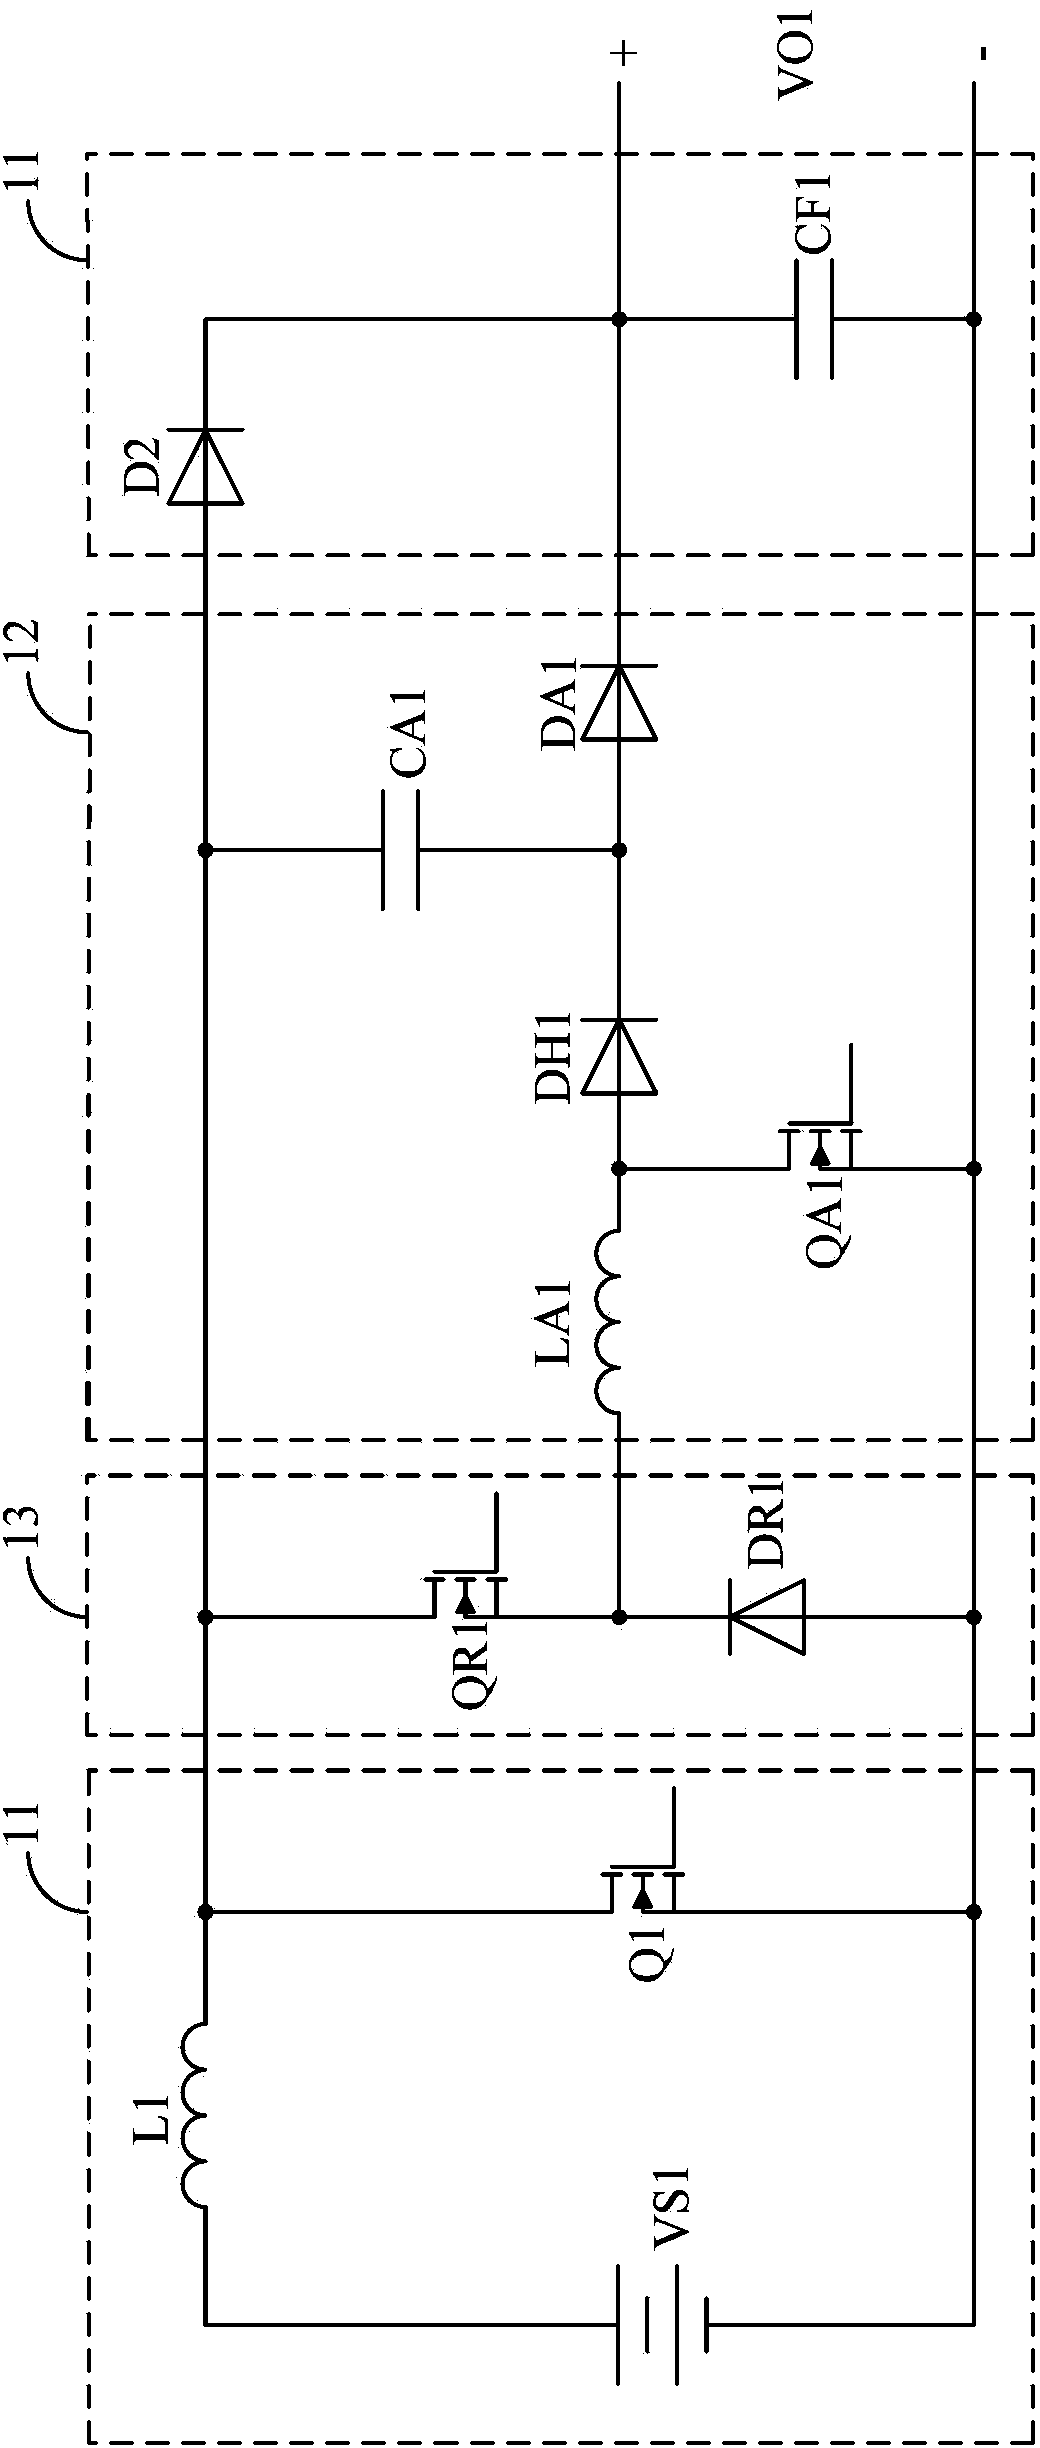 Zero-voltage switching pulse-width modulation converter